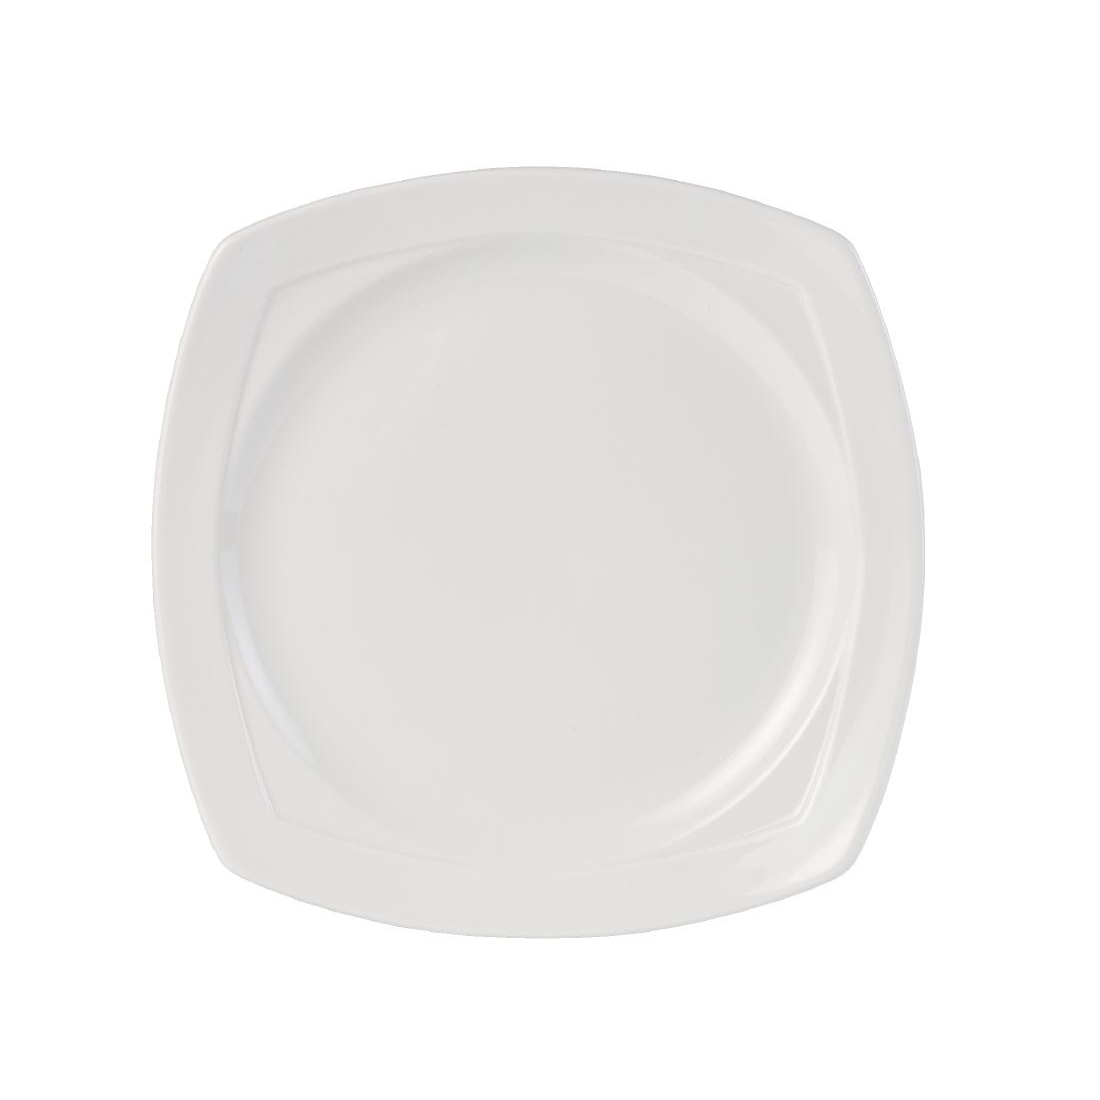 Steelite Simplicity White Harmony Square Plates 180mm